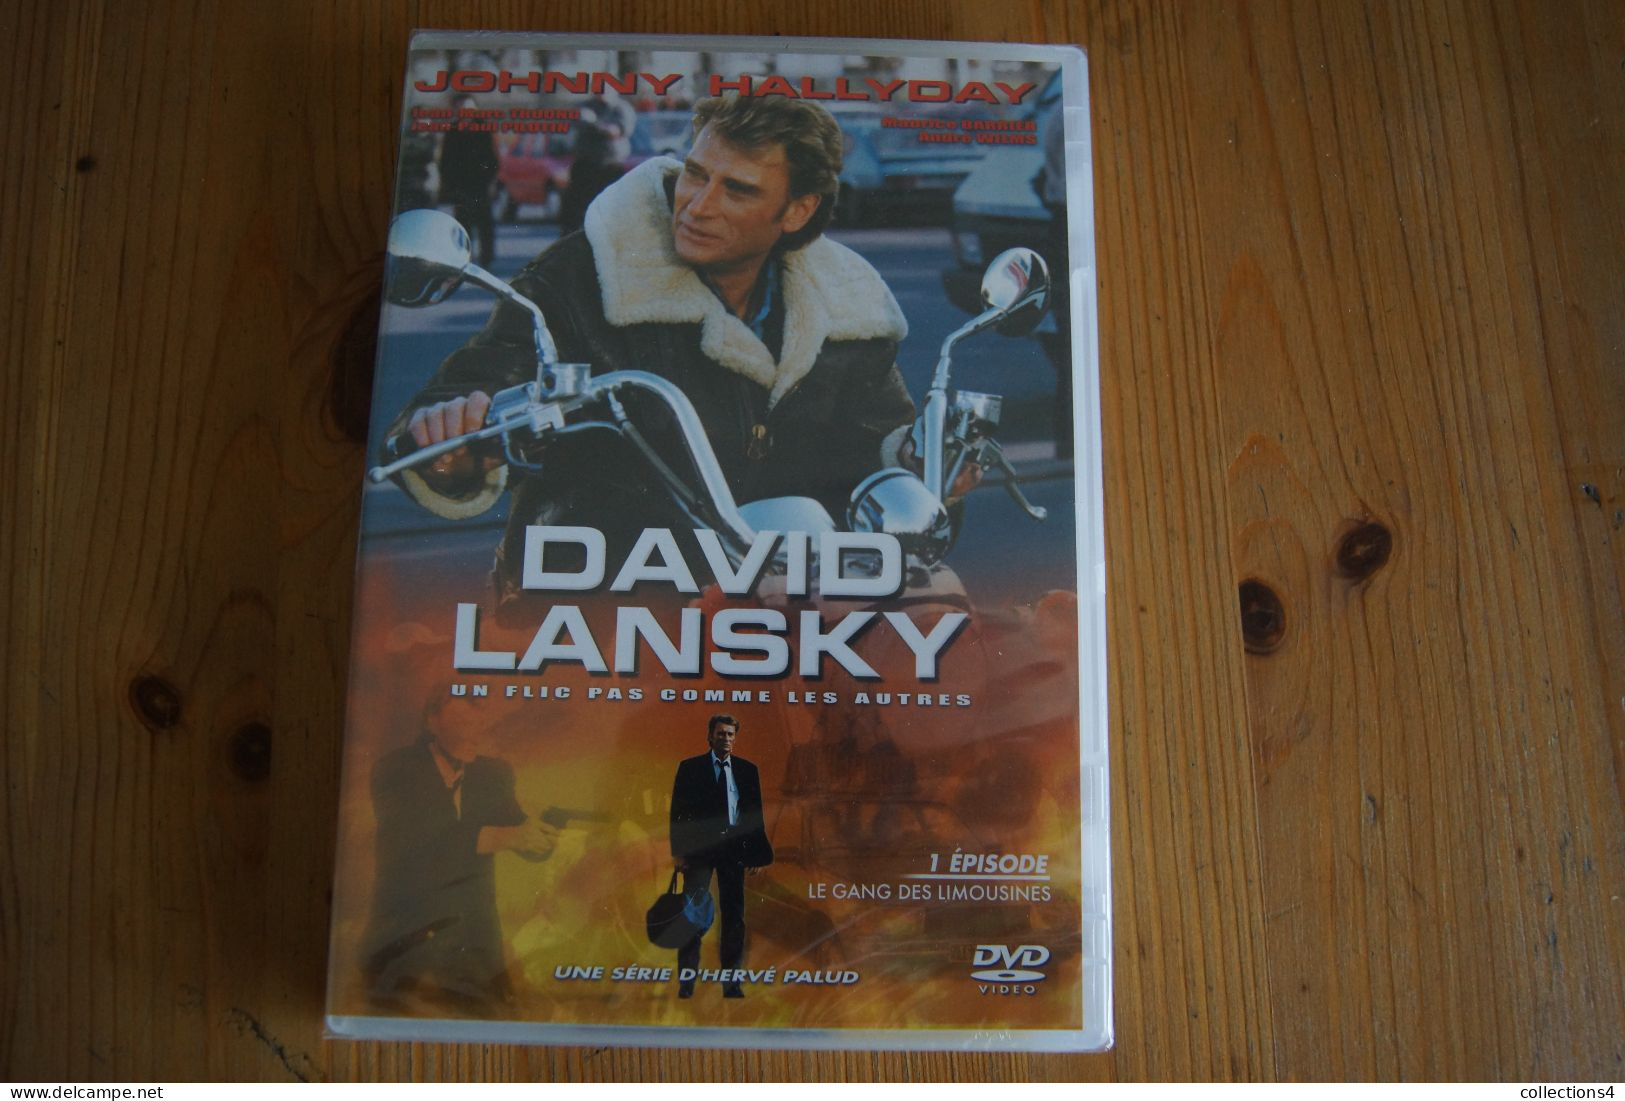 JOHNNY HALLYDAY DAVID LANSKY LE GANG DES LIMOUSINES DVD NEUF SCELLE - Action, Aventure